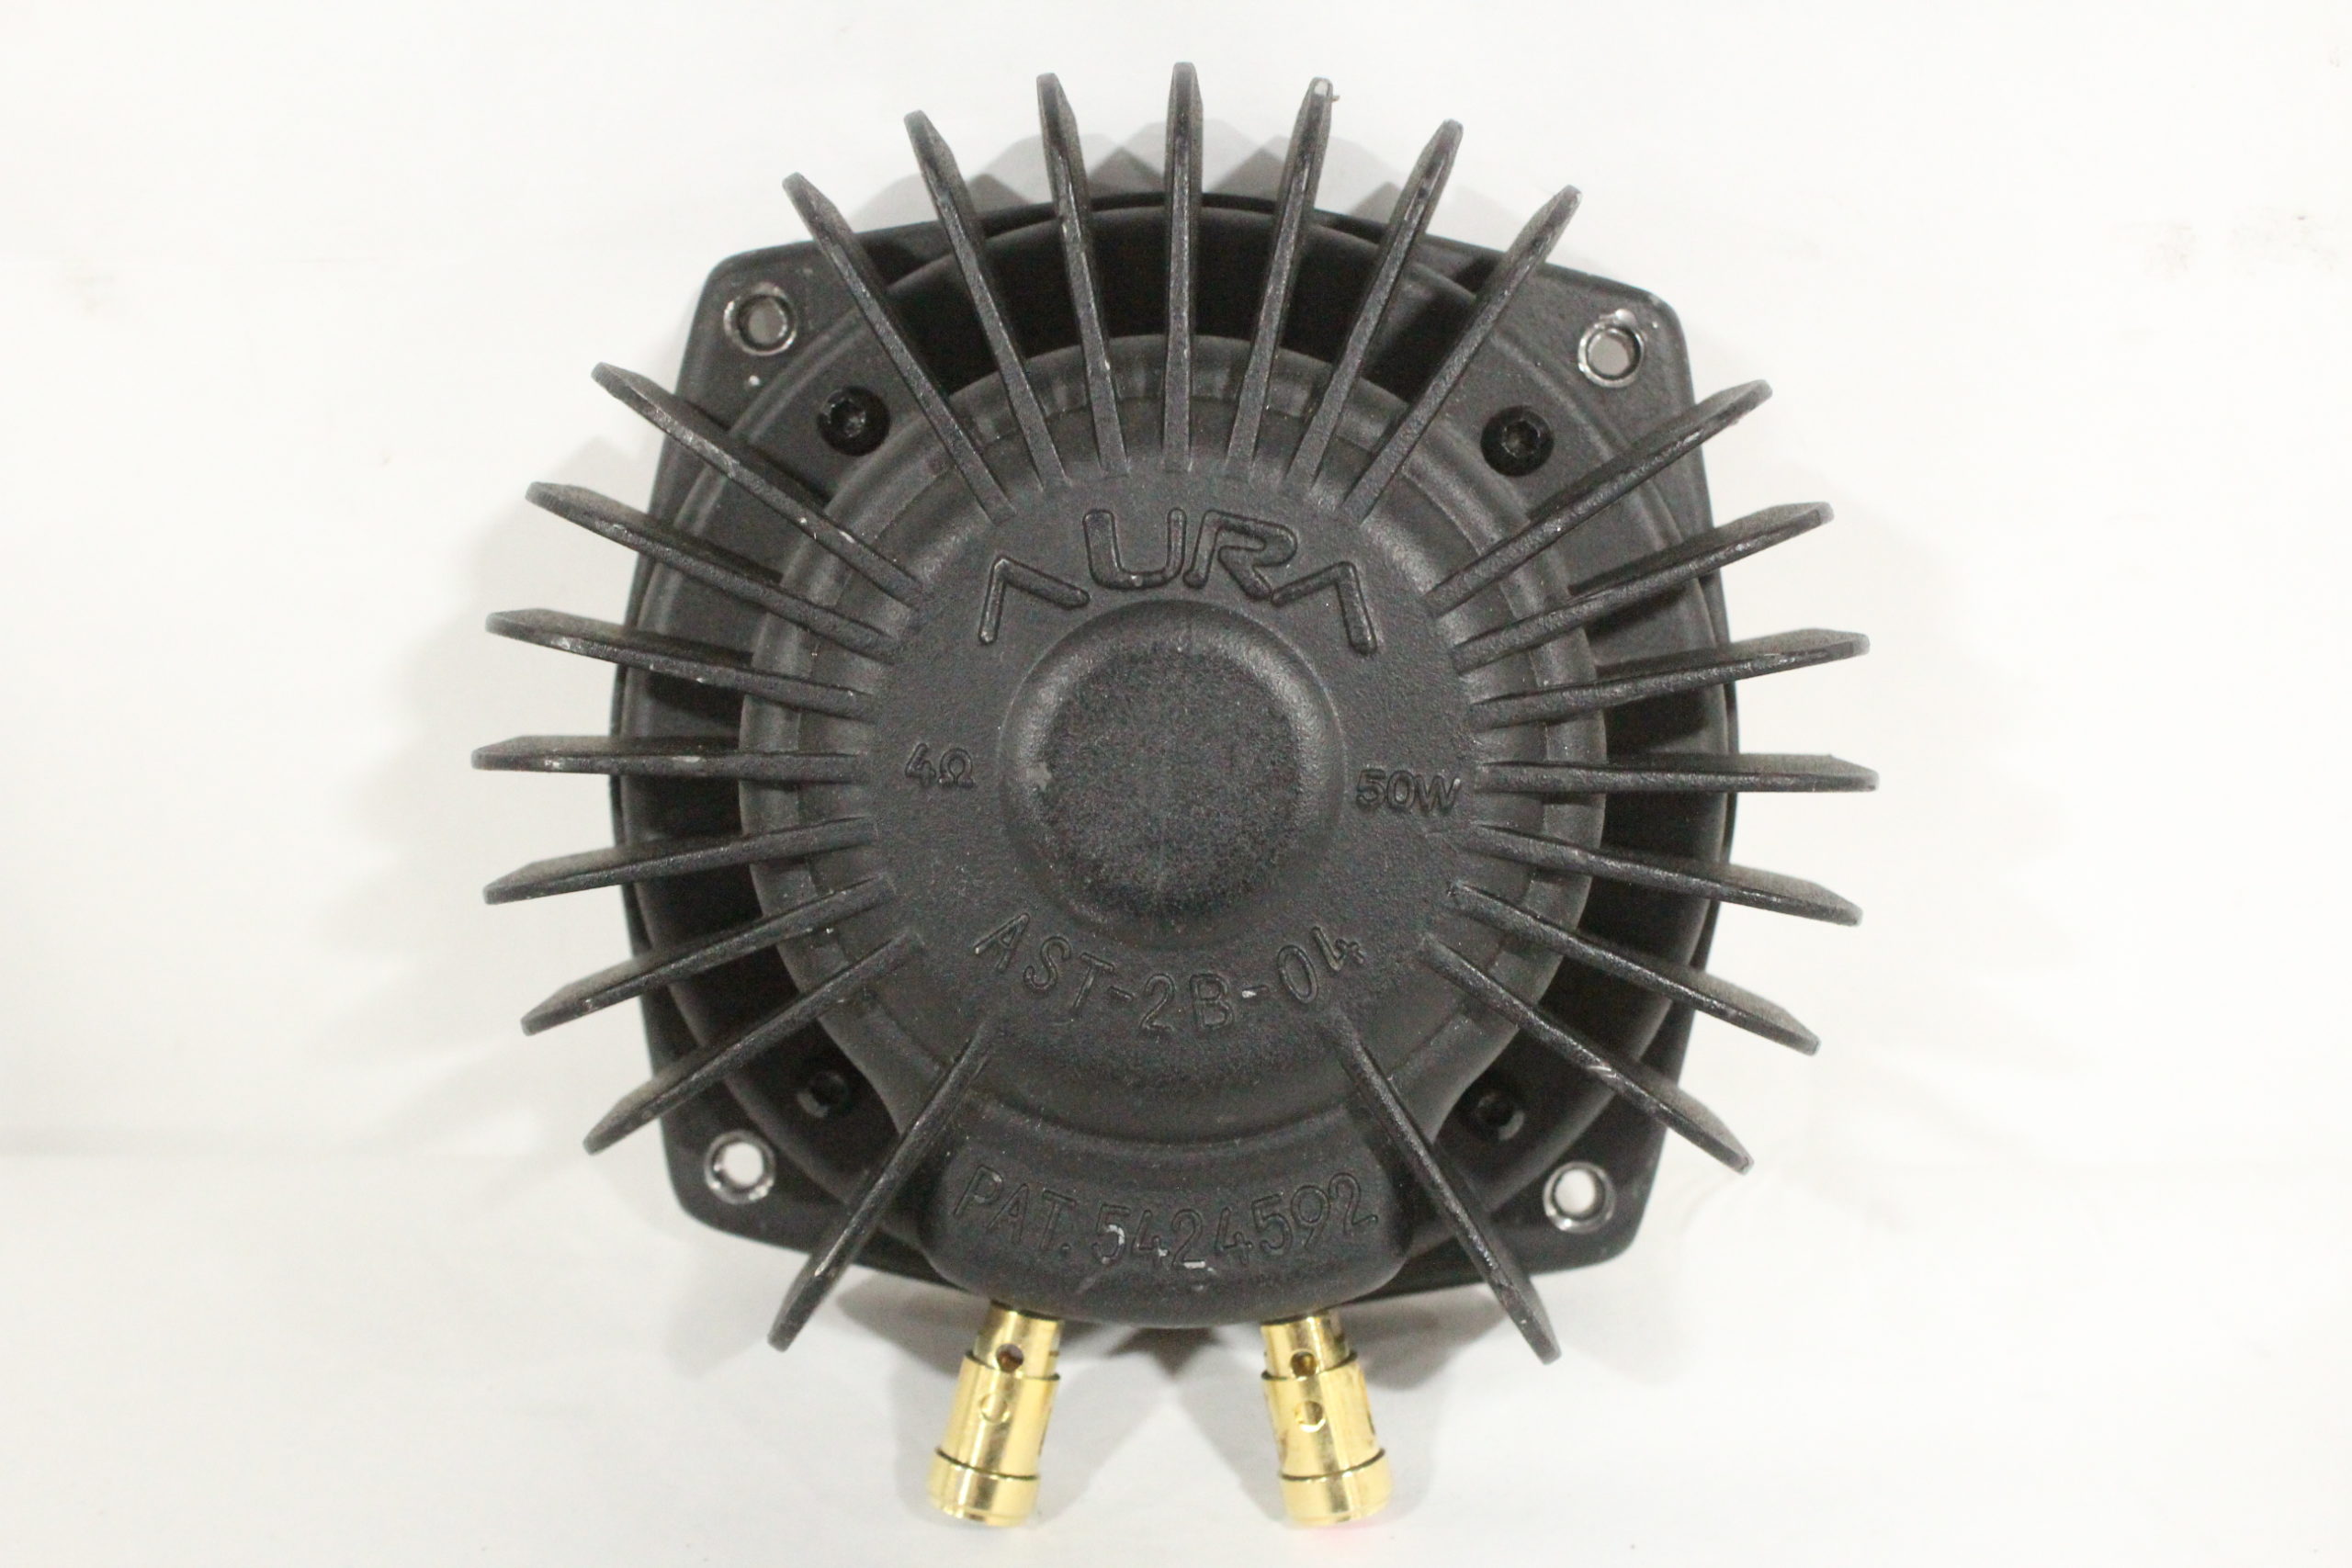 AuraSound AST-2B-4 Pro Bass Shaker Tactile Transducer (1407-345)